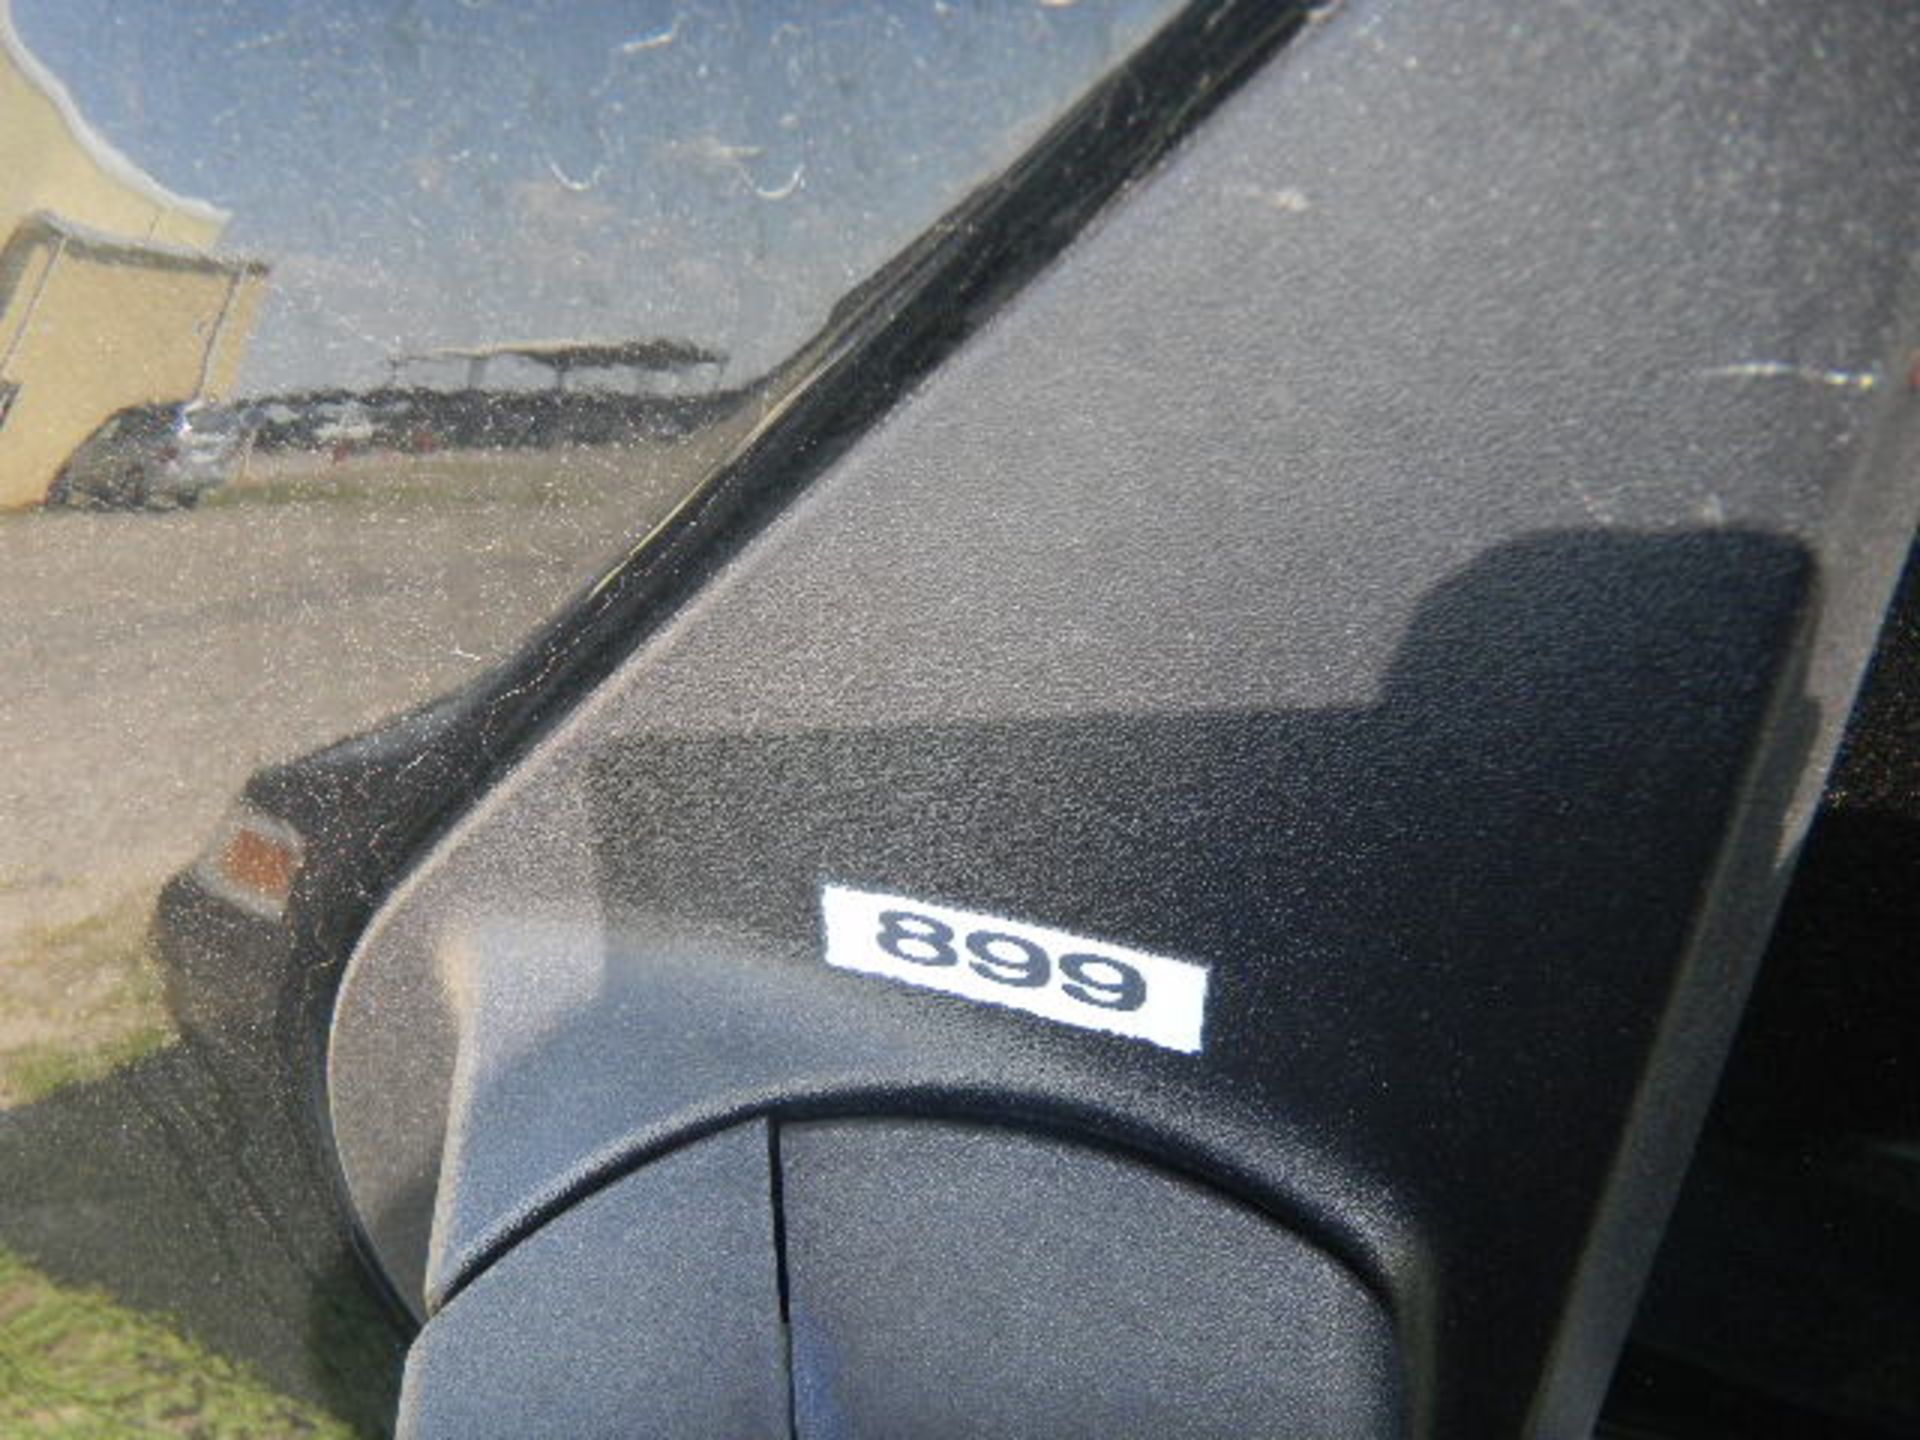 2013 Chevrolet Tahoe SUV Patrol Car - Asset I.D. #899 - Last of Vin (284825) - Image 6 of 7